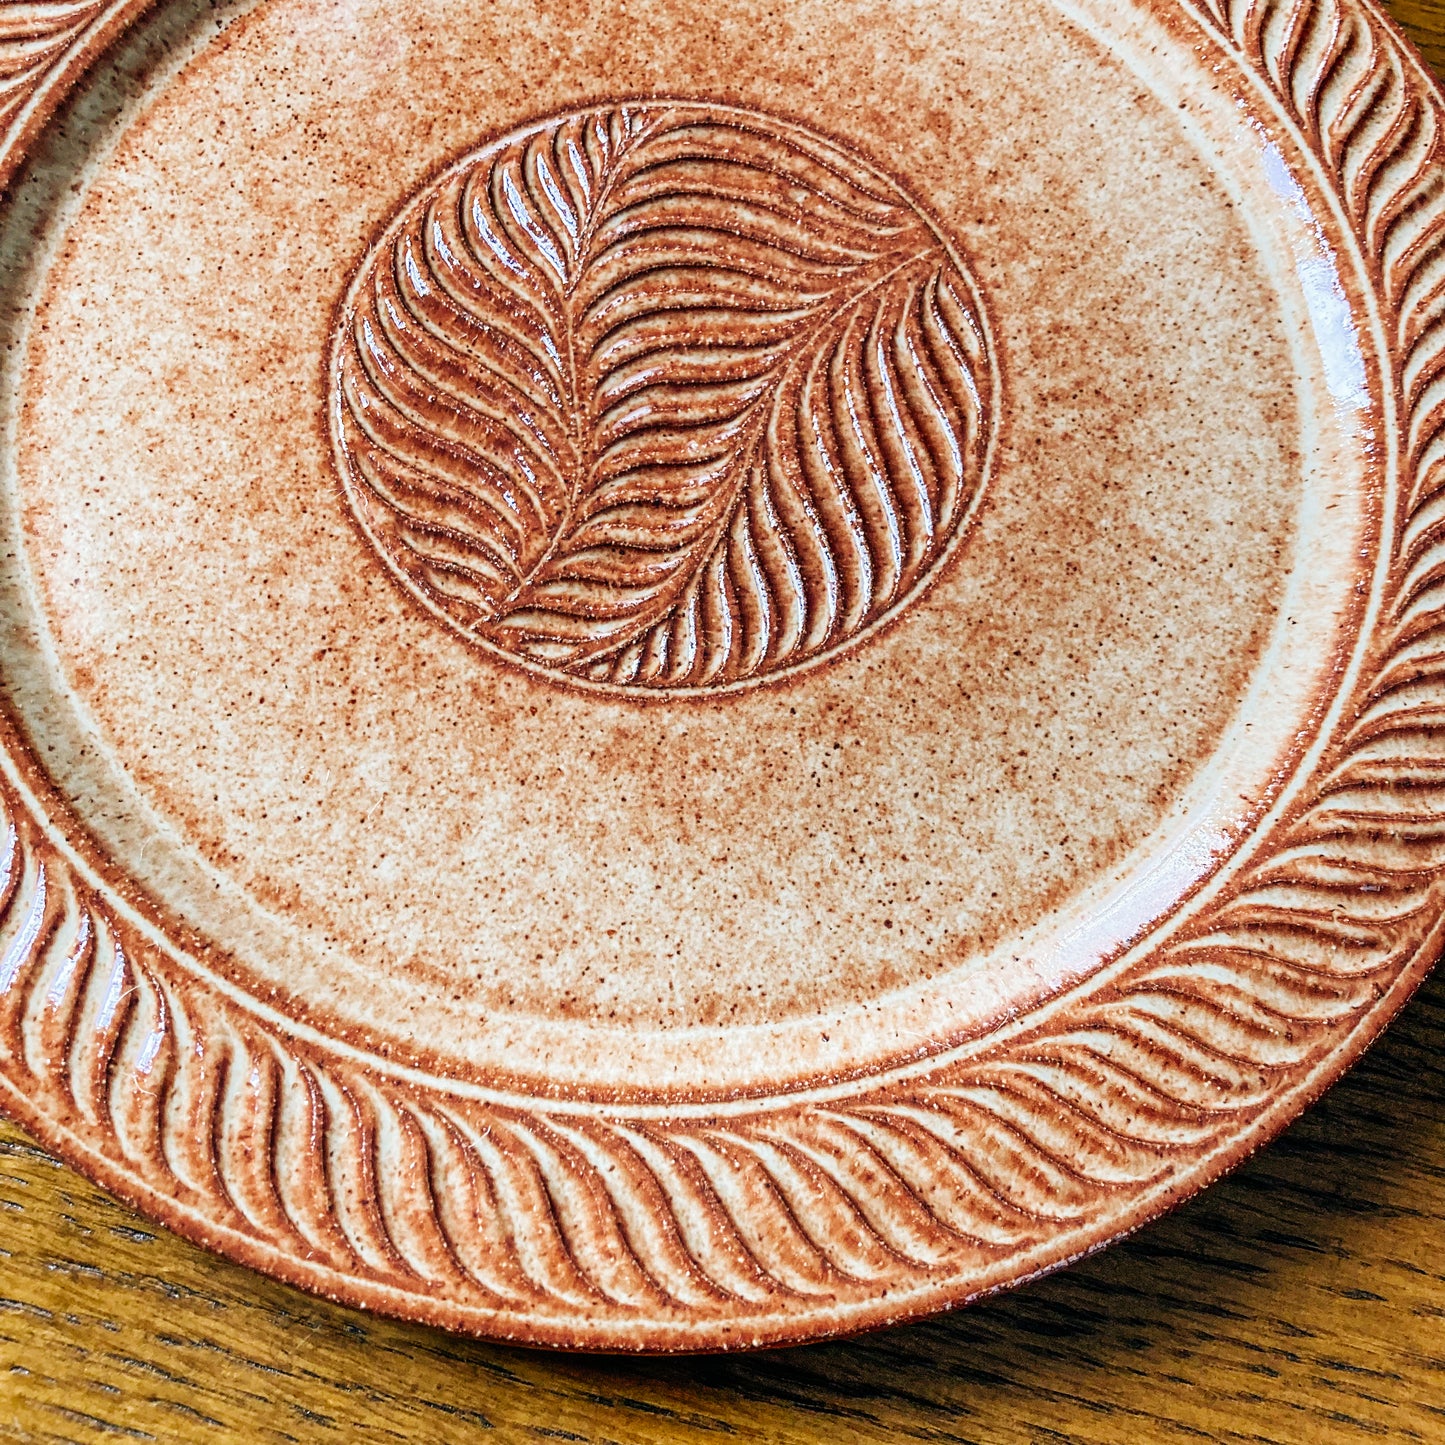 Leaf Plate with Fern Edges